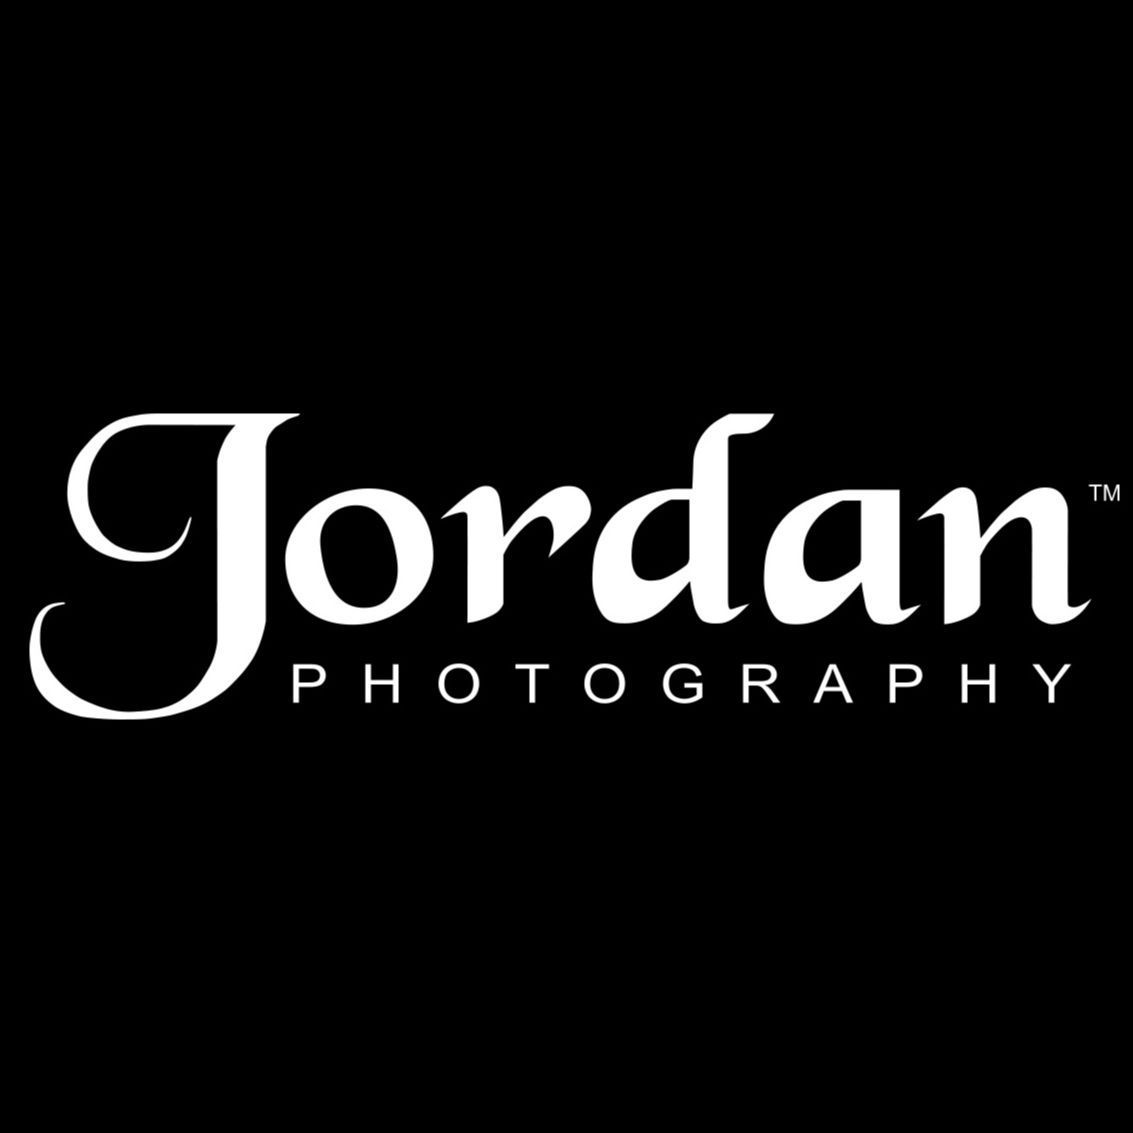 Jordan Photography - Jordan Photography